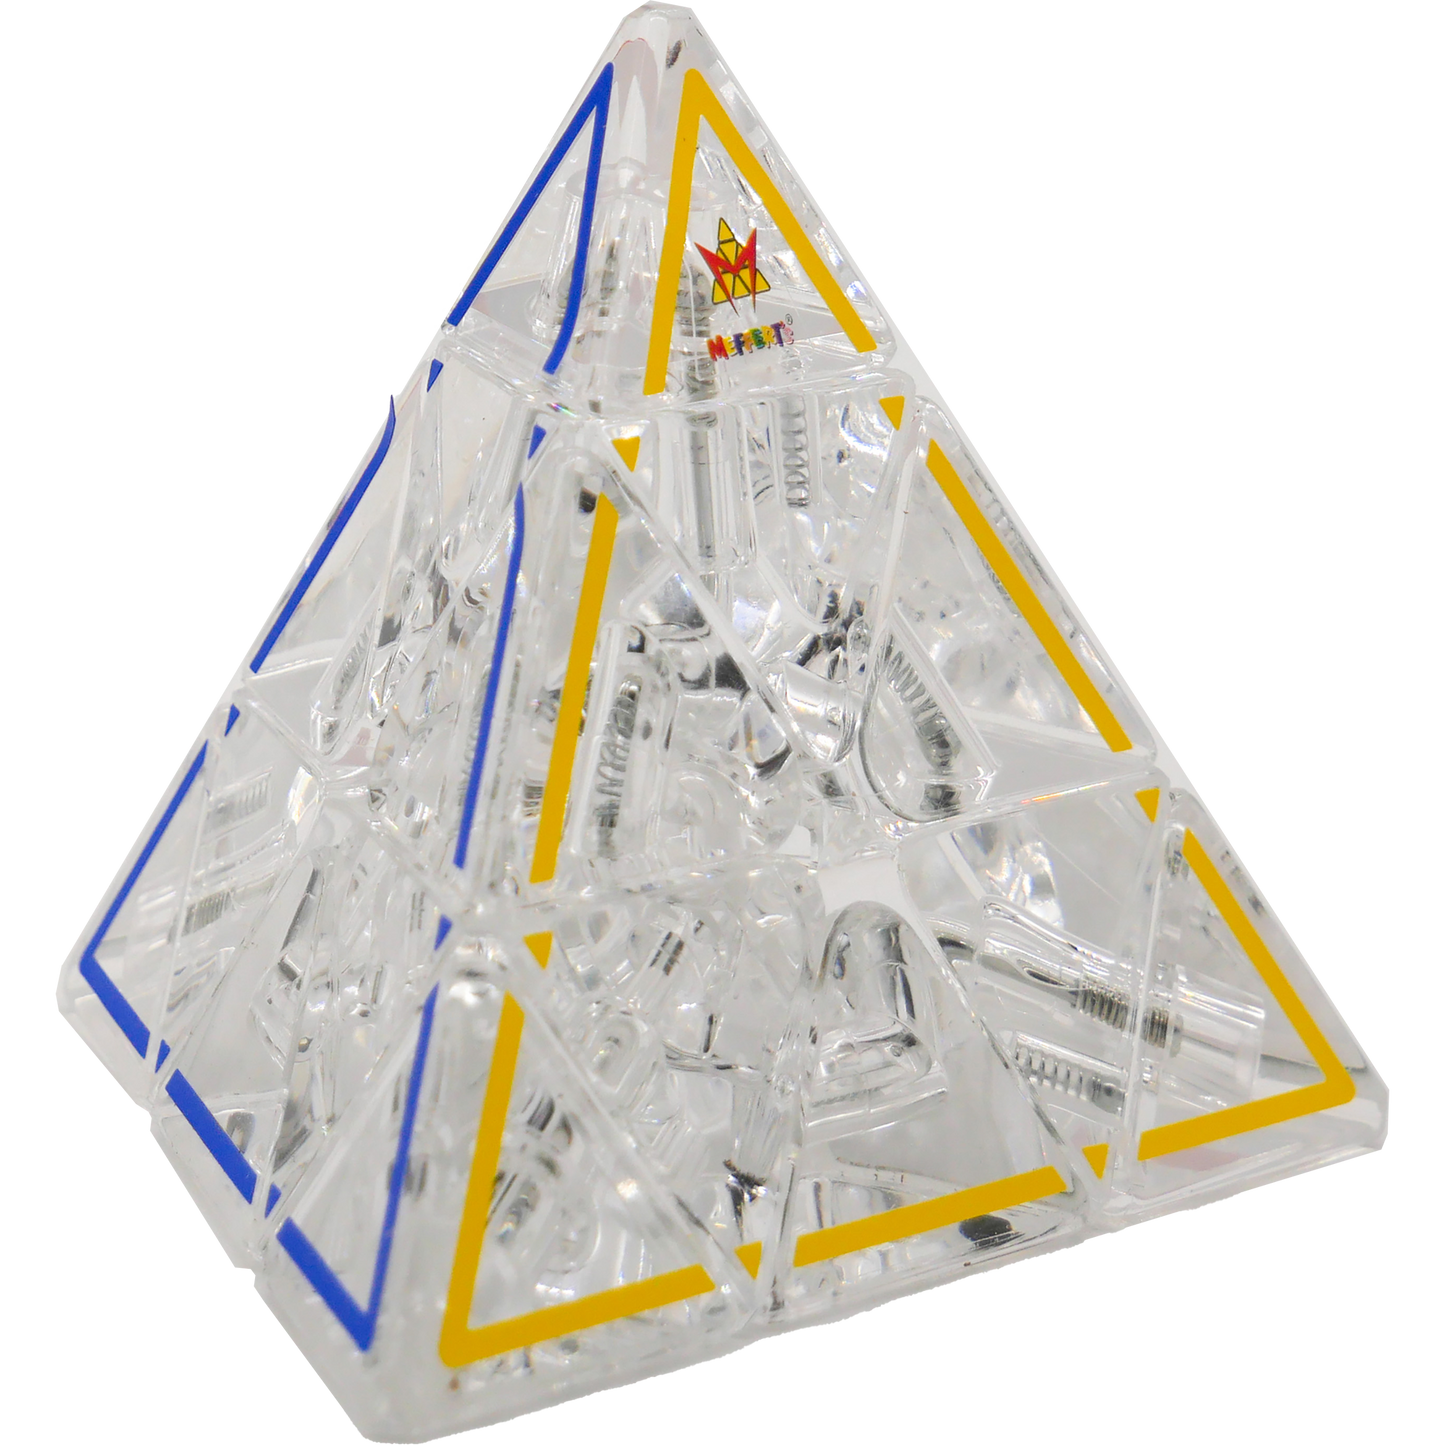 Meffert's Crystal Pyraminx